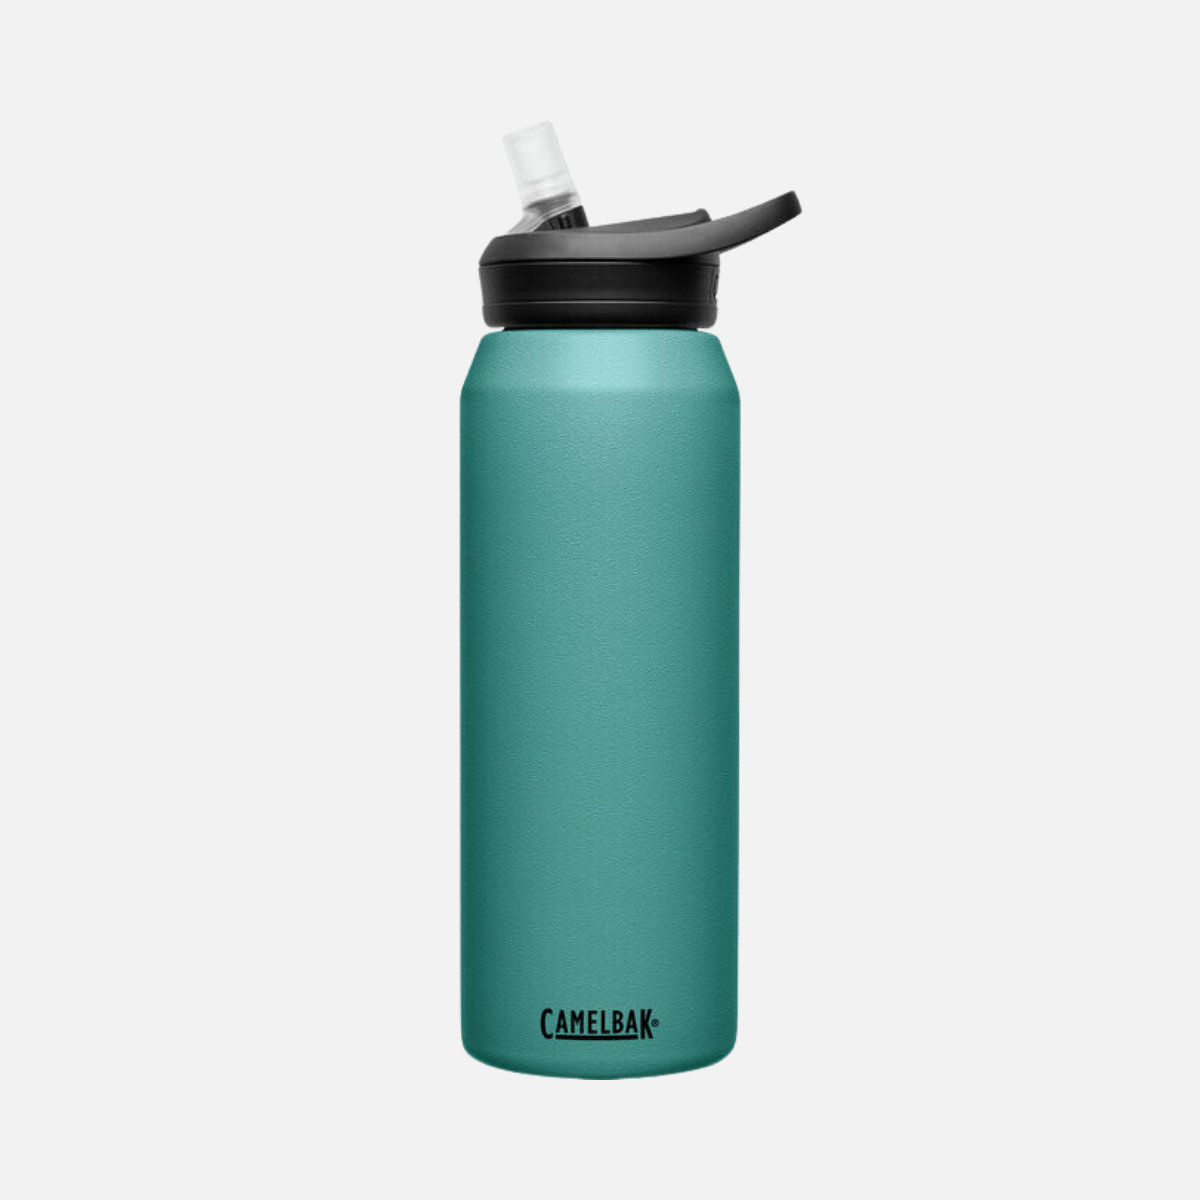 Eddy+ Vacuum Insulated Stainless Steel Water Bottle 1L -Jet/Navy/Dusk Blue/Lagoon